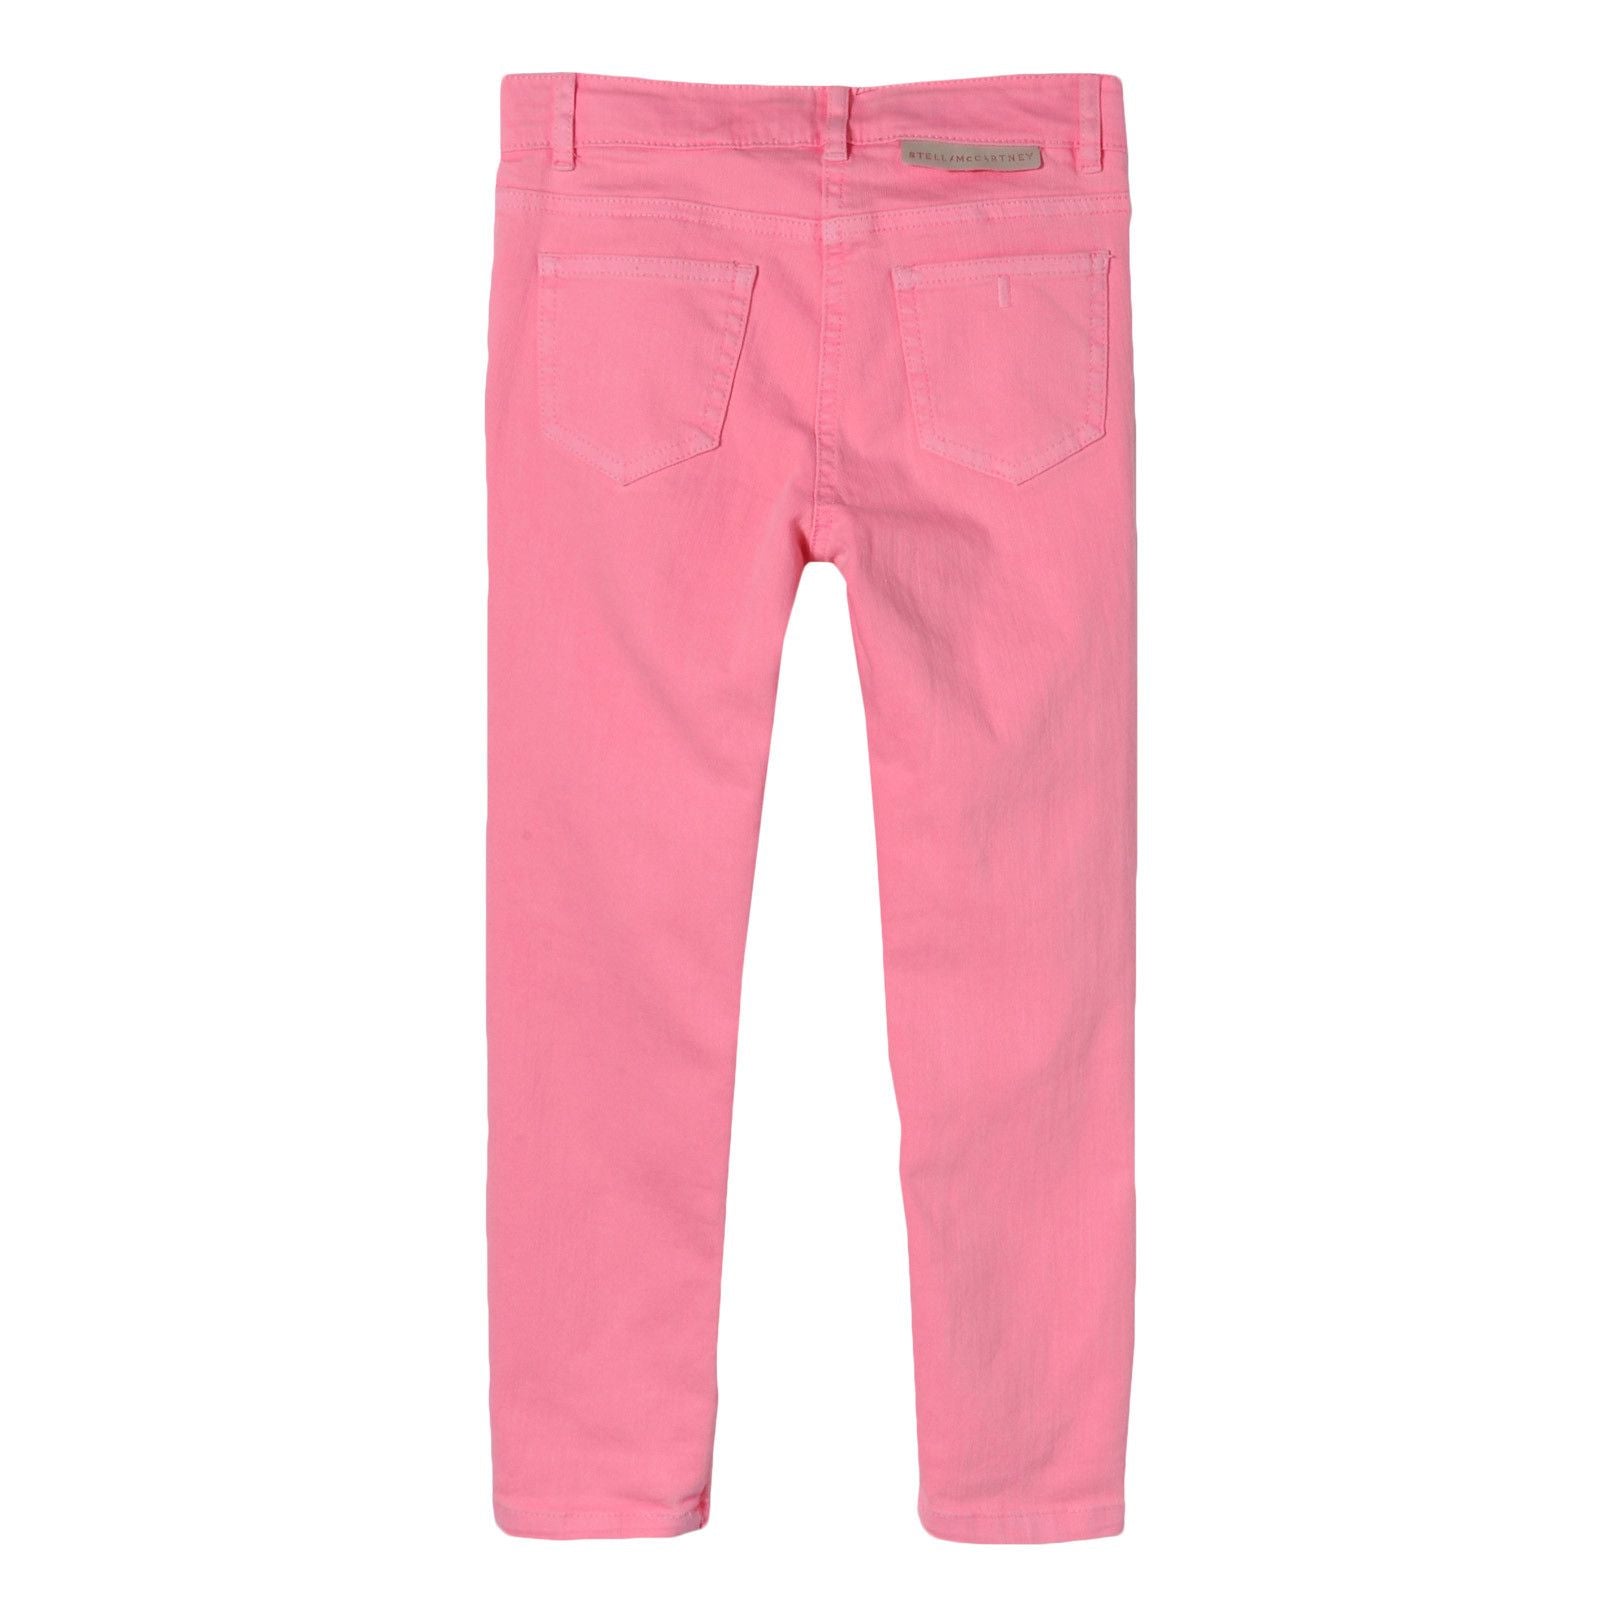 Girls Pink Cotton Jersey Trousers - CÉMAROSE | Children's Fashion Store - 2